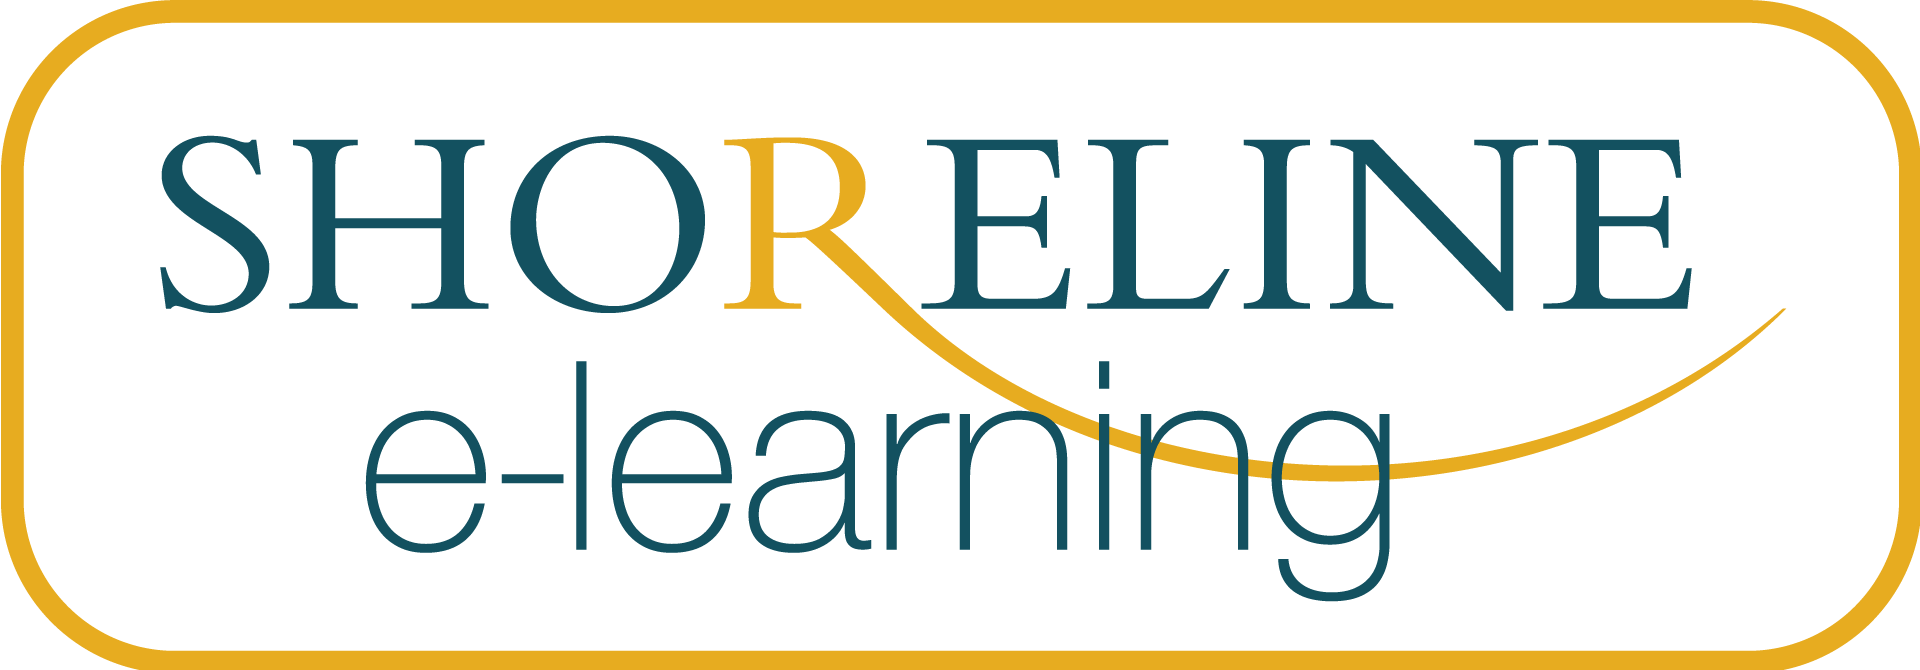 Shoreline e-learning logo